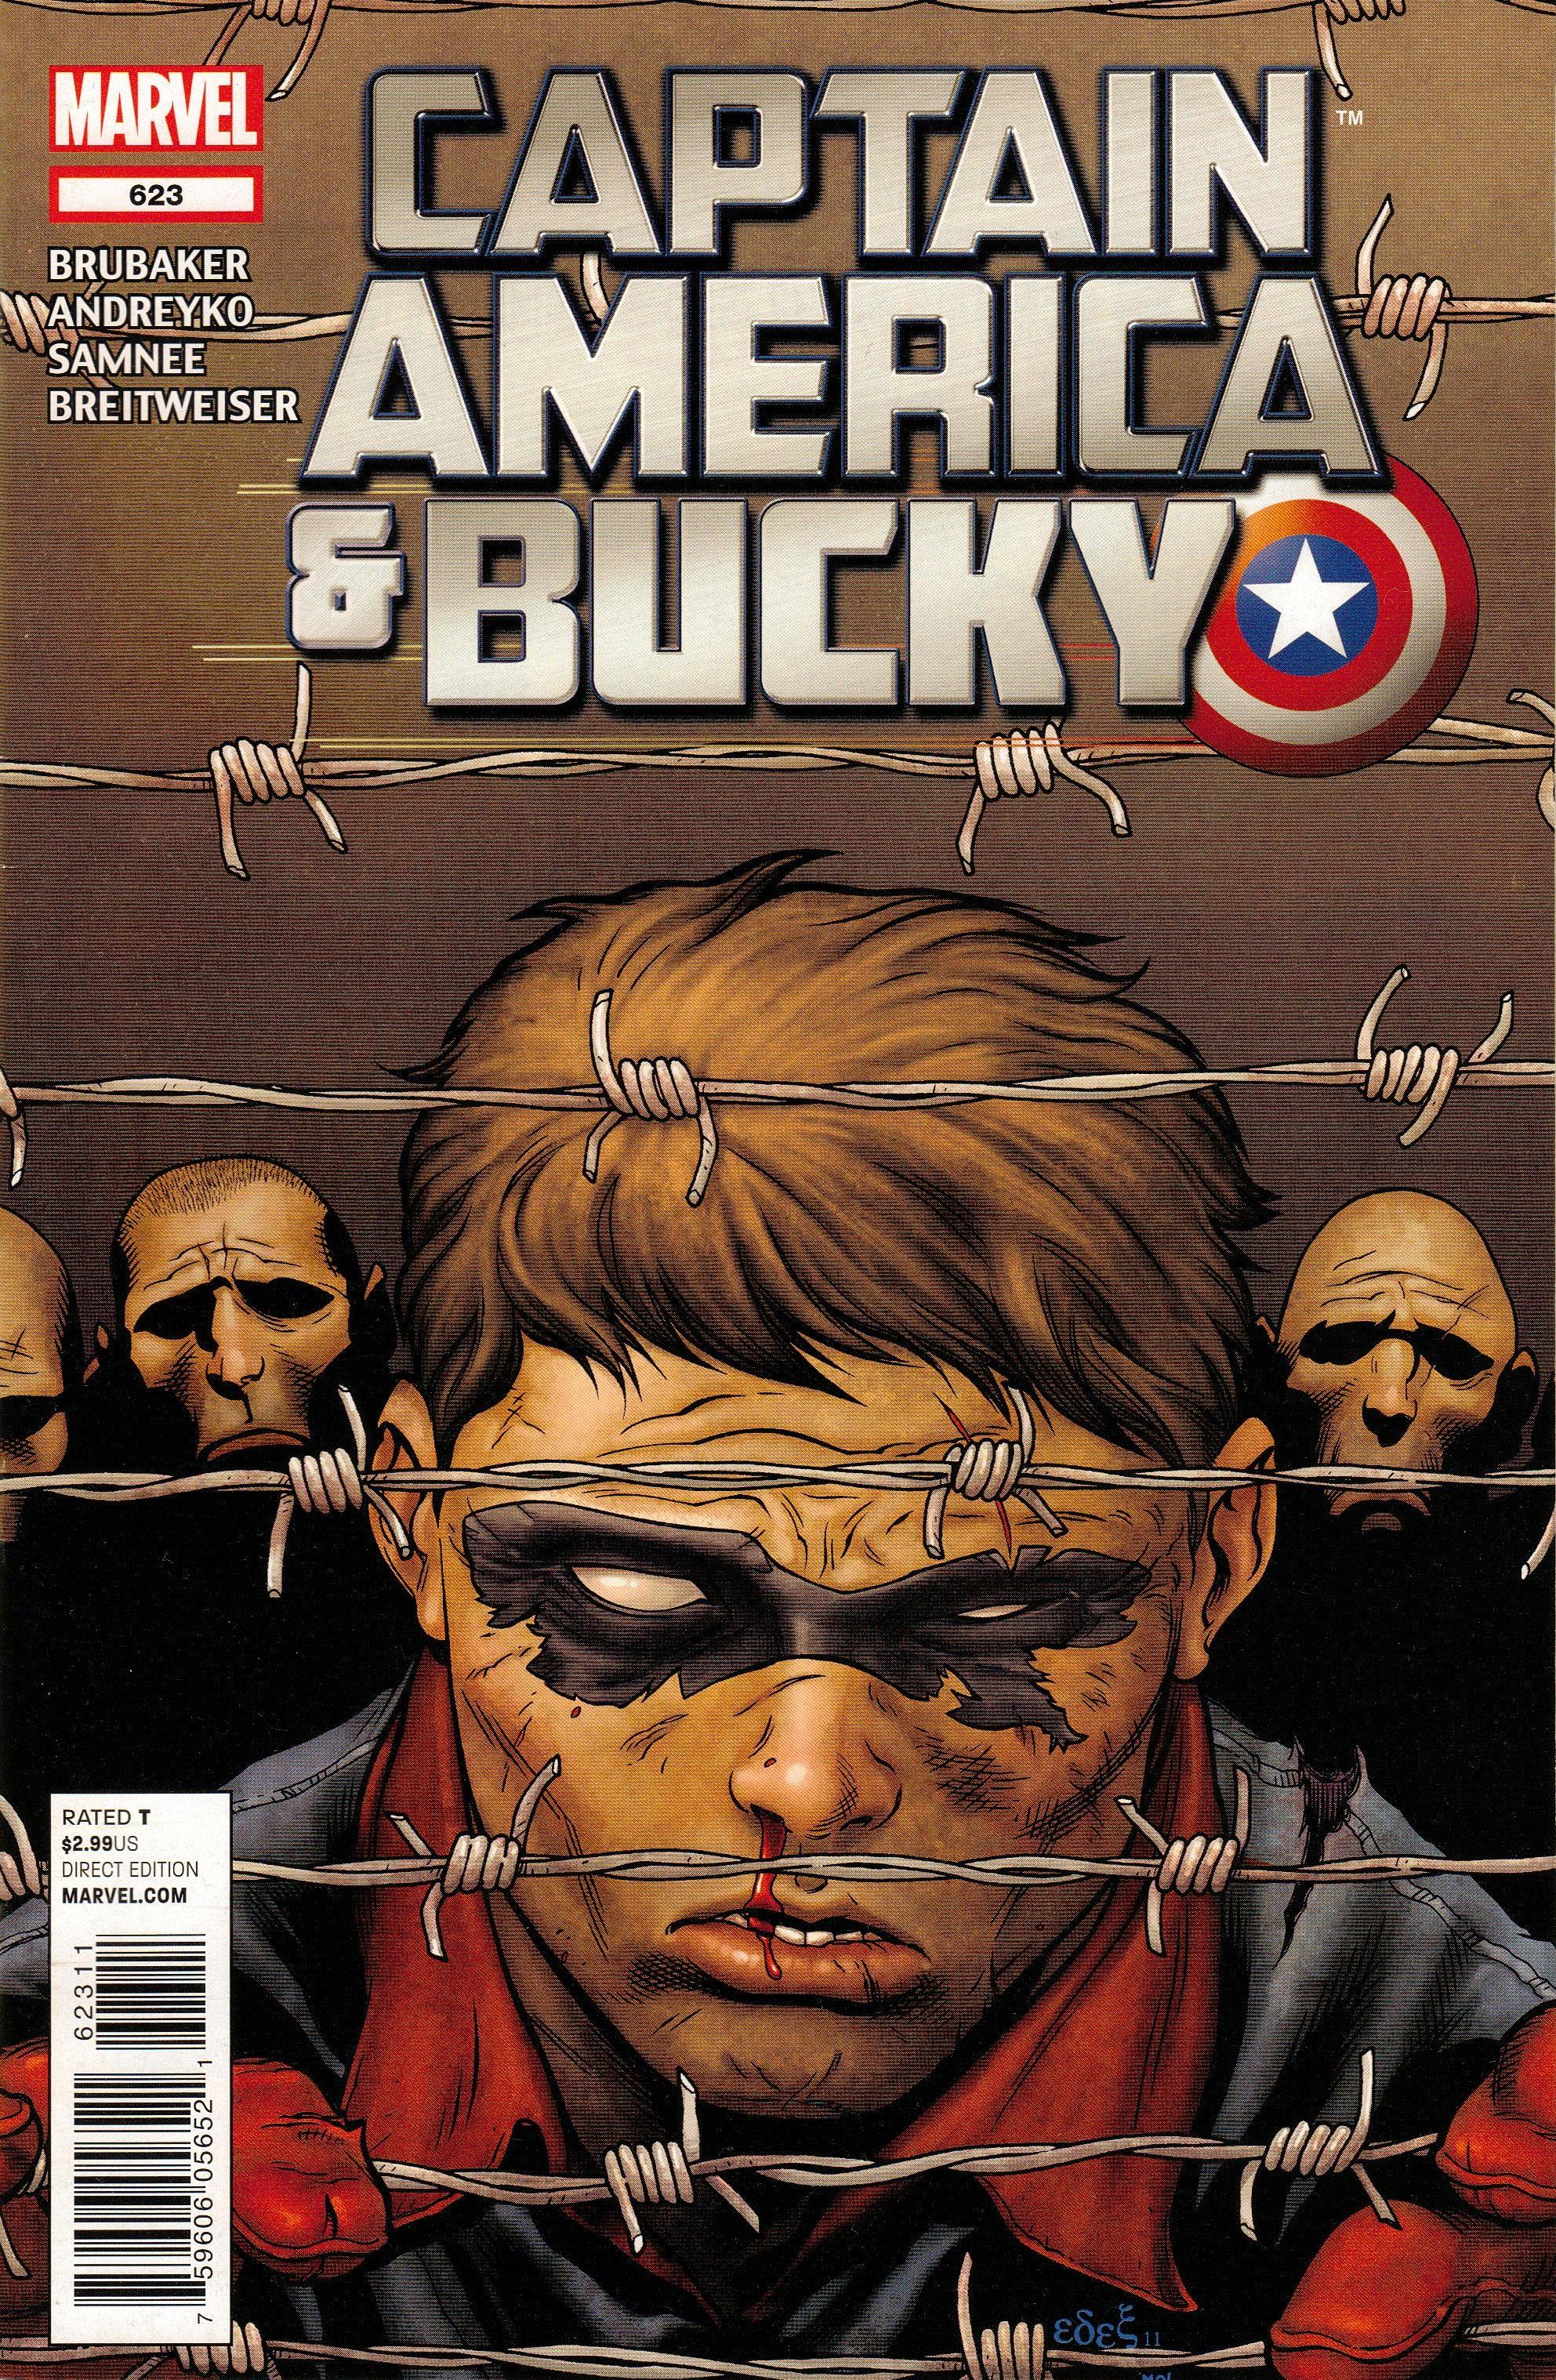 Captain America and Bucky Vol. 1 #623